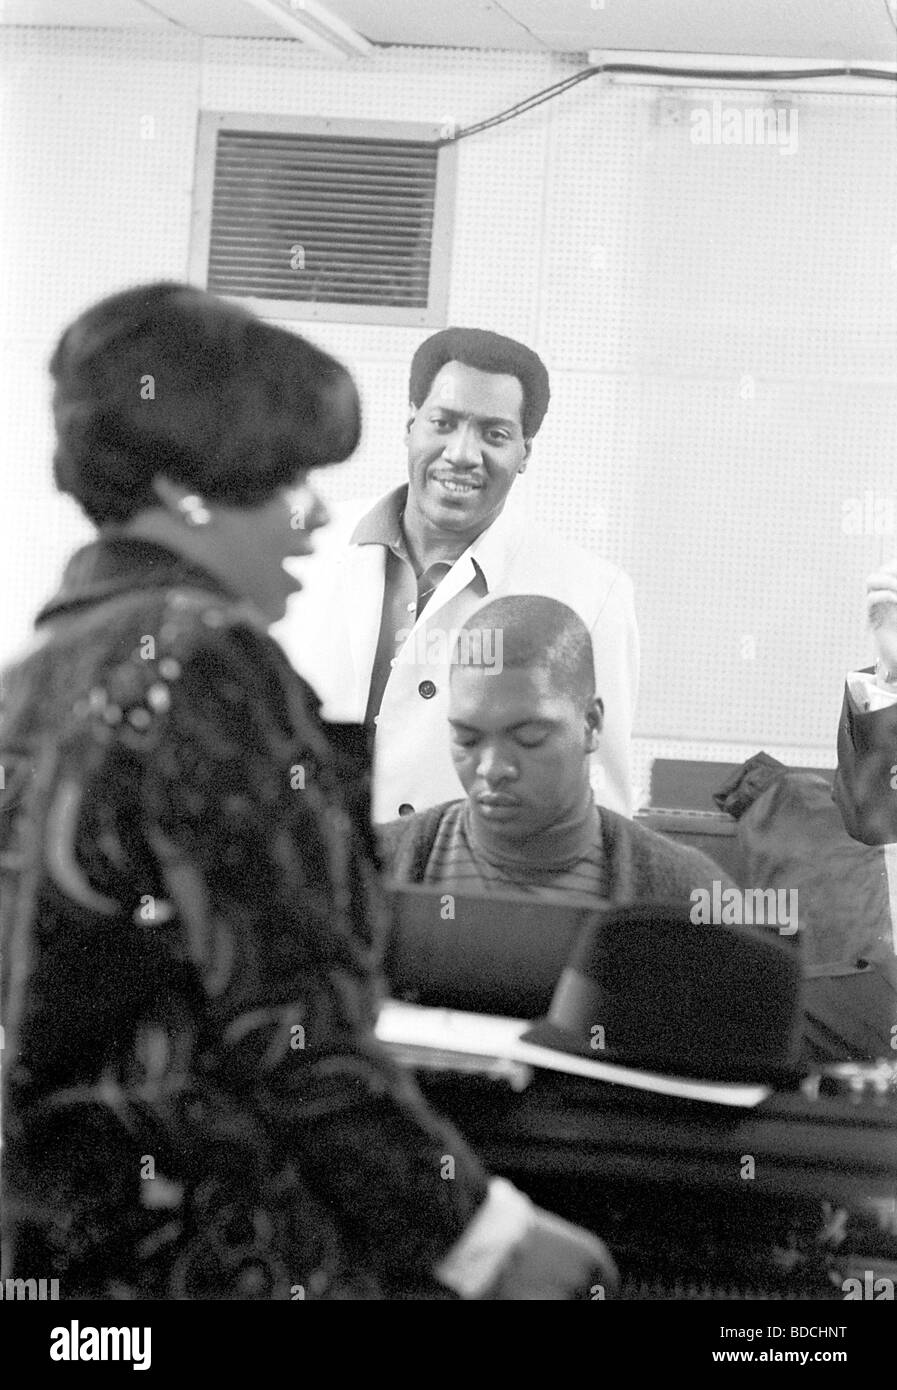 OTIS REDDING with T at a London recording studio during their 1967 European tour with Carla Thomas. See Description below Photo - Alamy